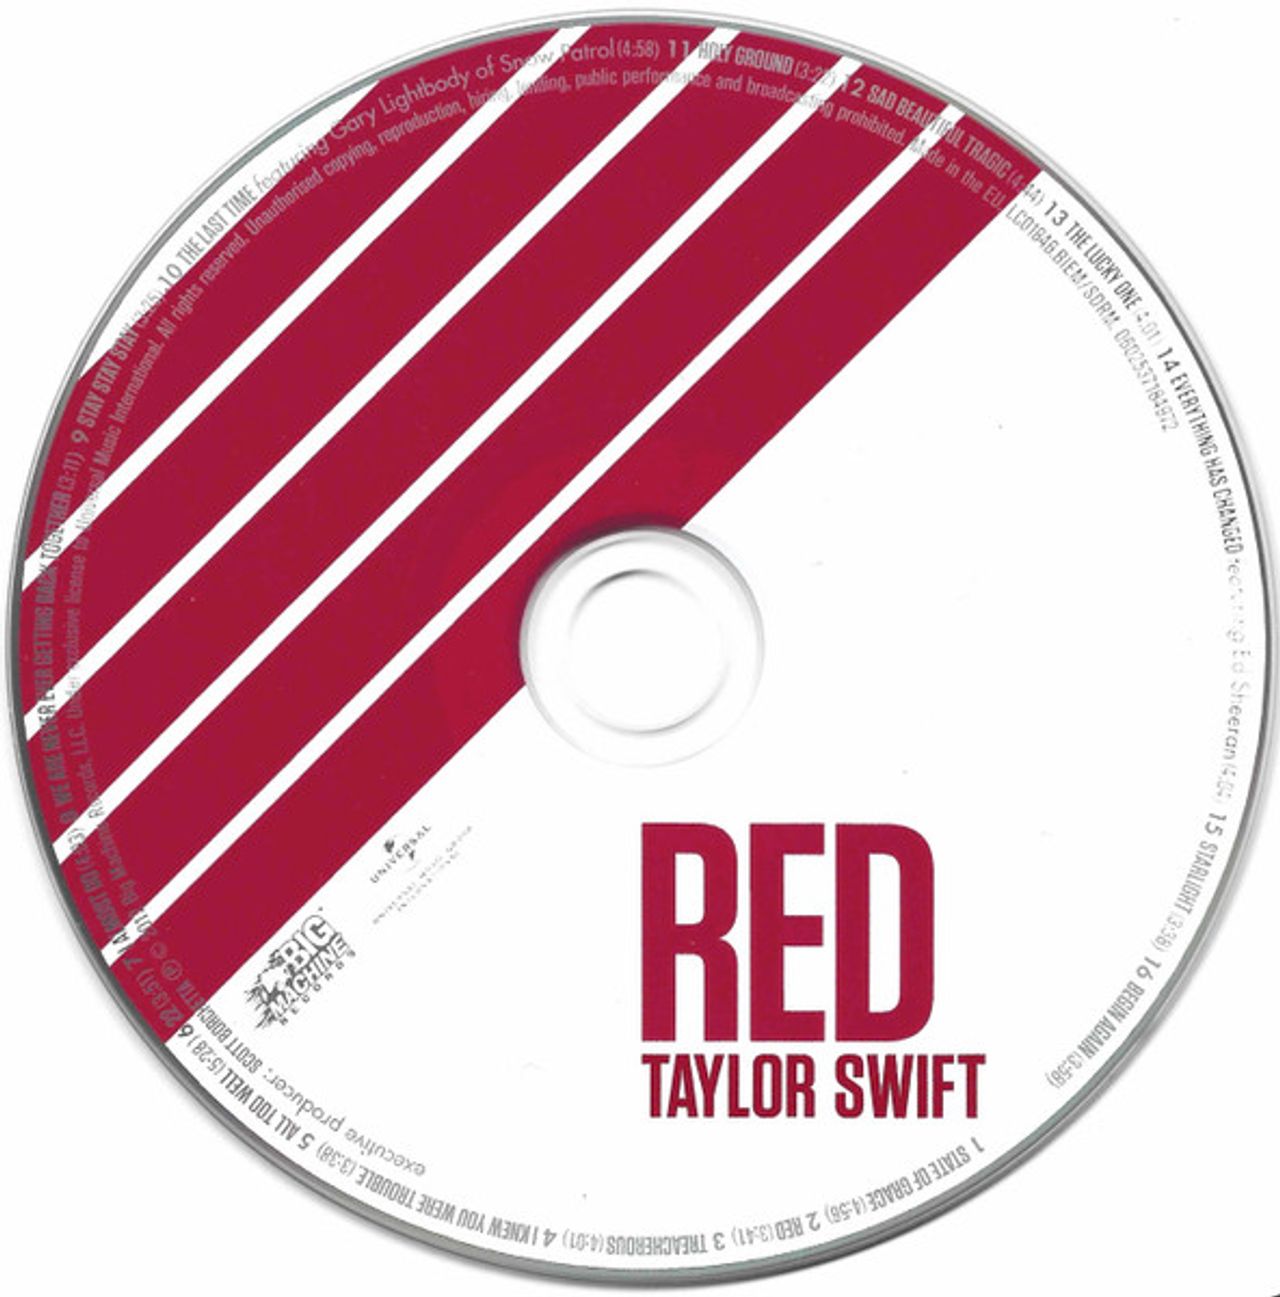 Taylor Swift Red - Sealed UK CD album — RareVinyl.com